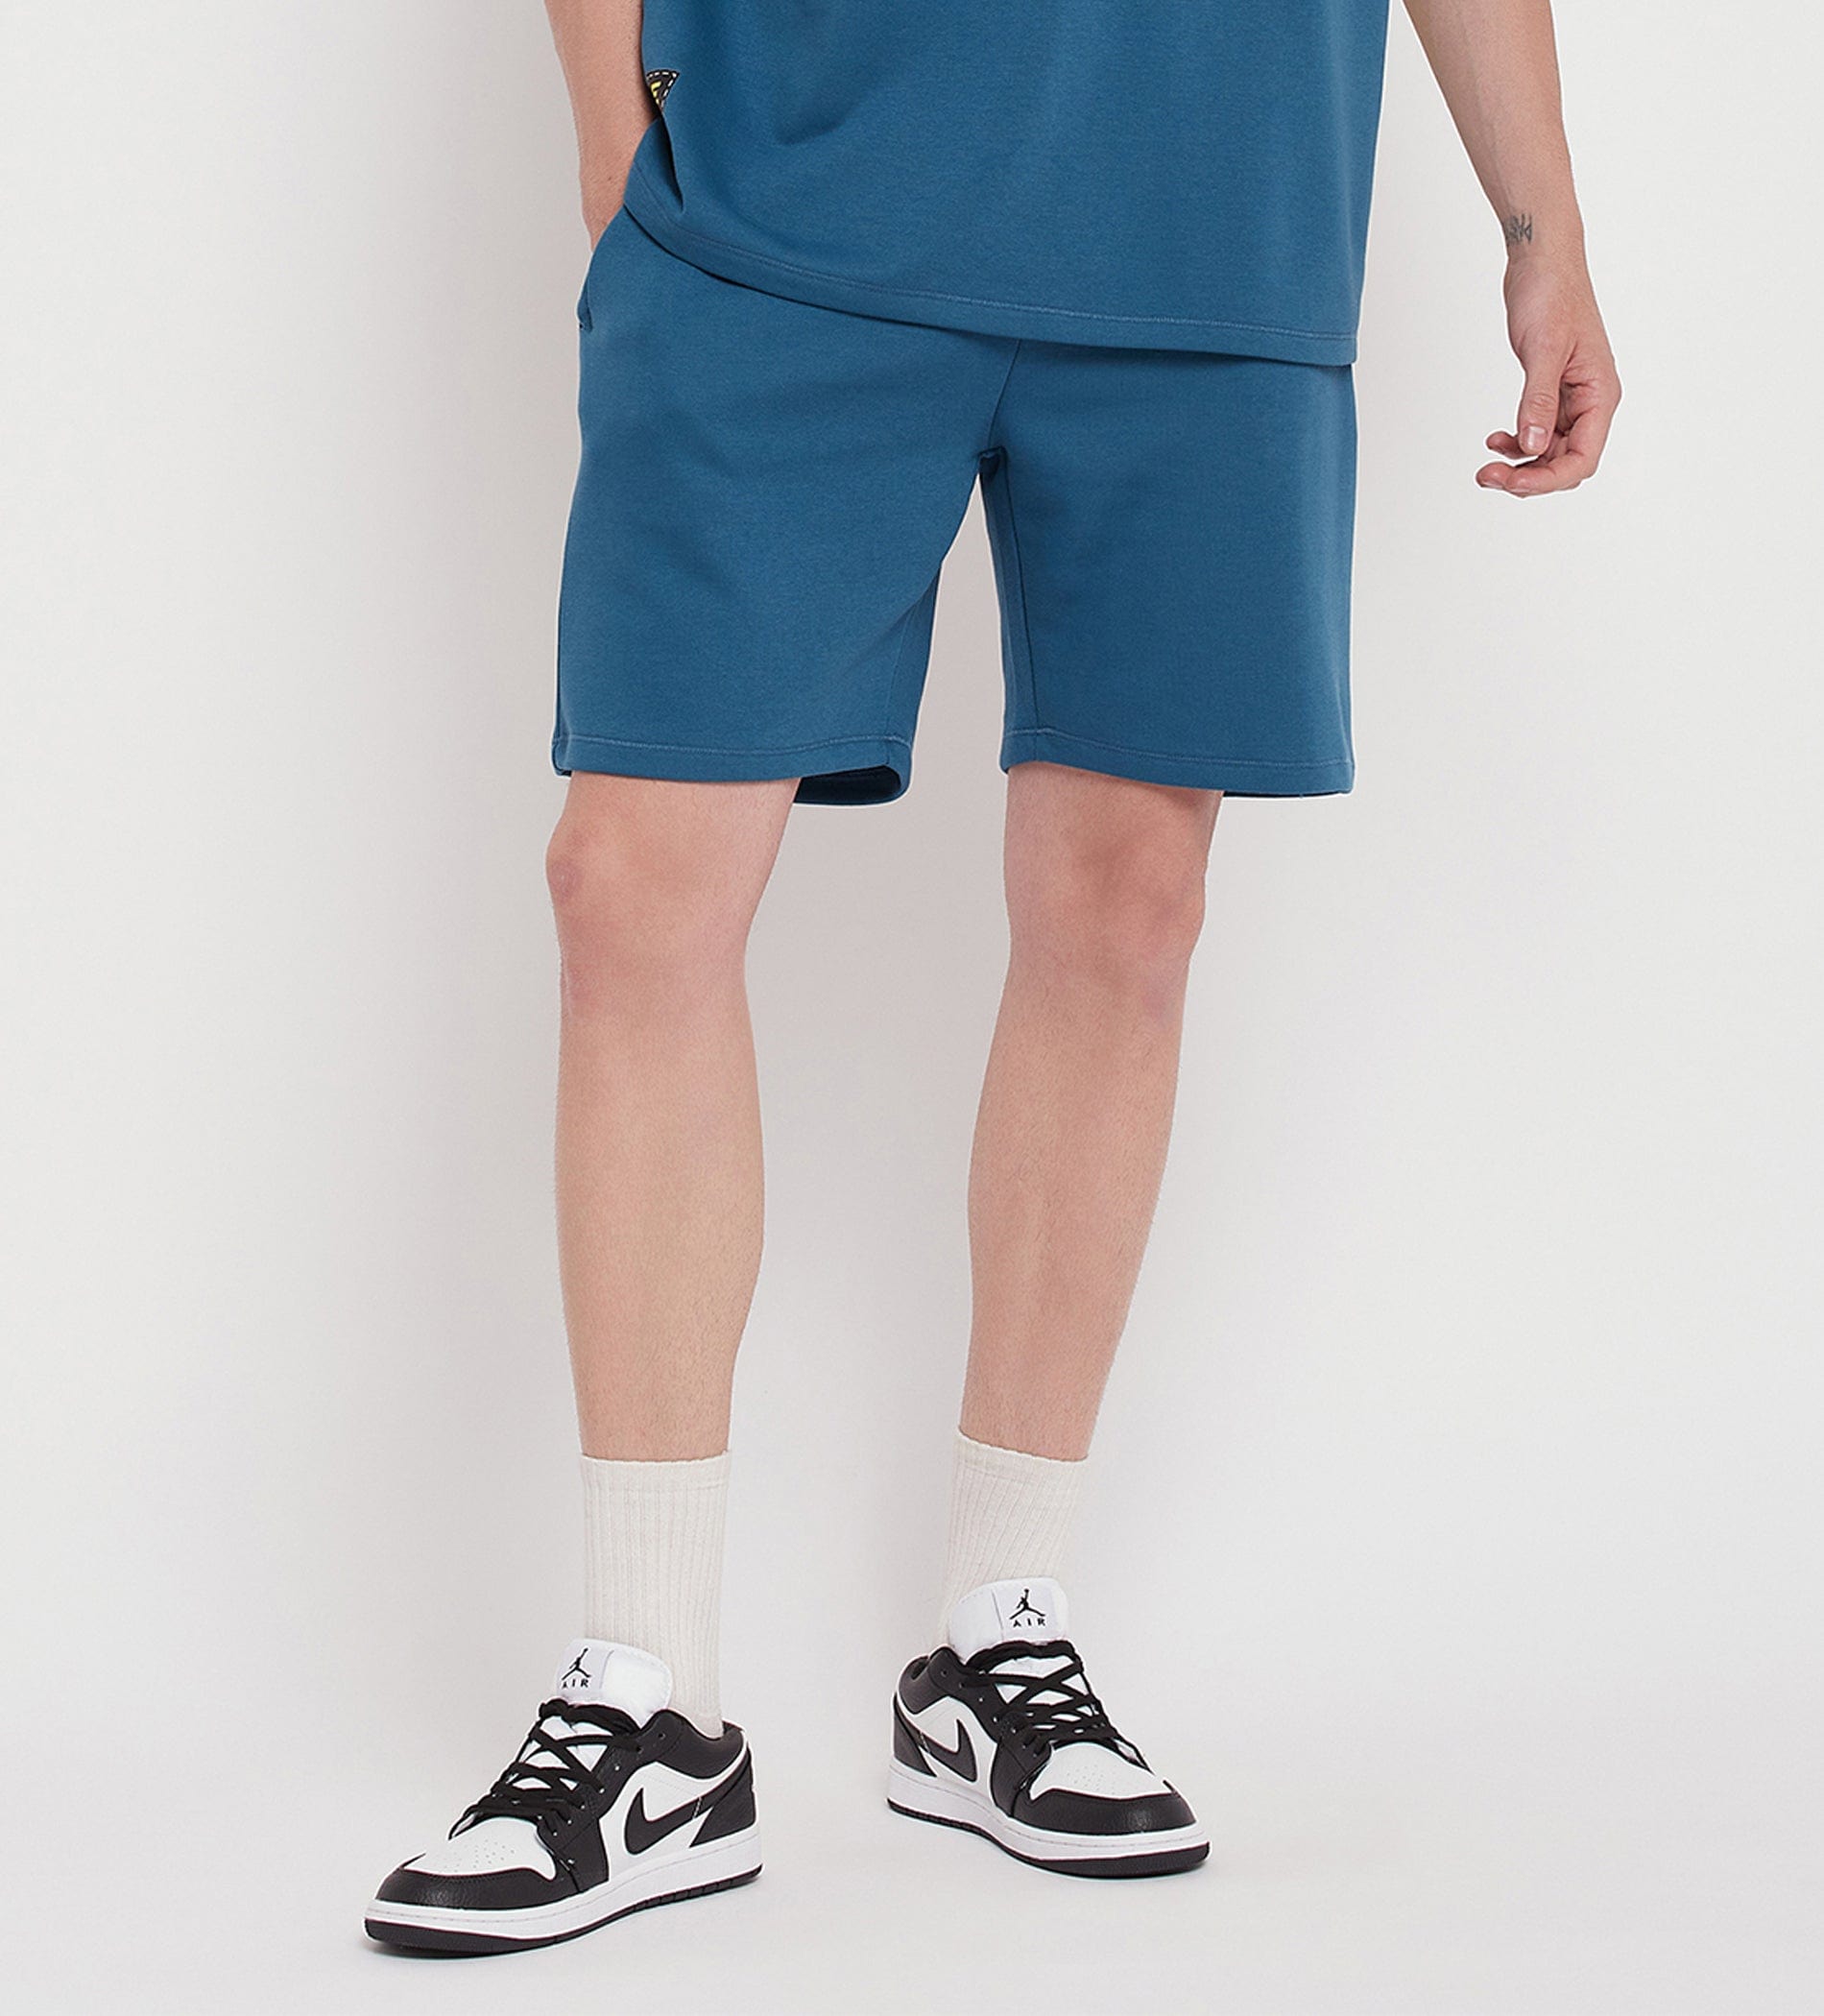 Shorts Shorts Ink Blue Skate Shorts for Men